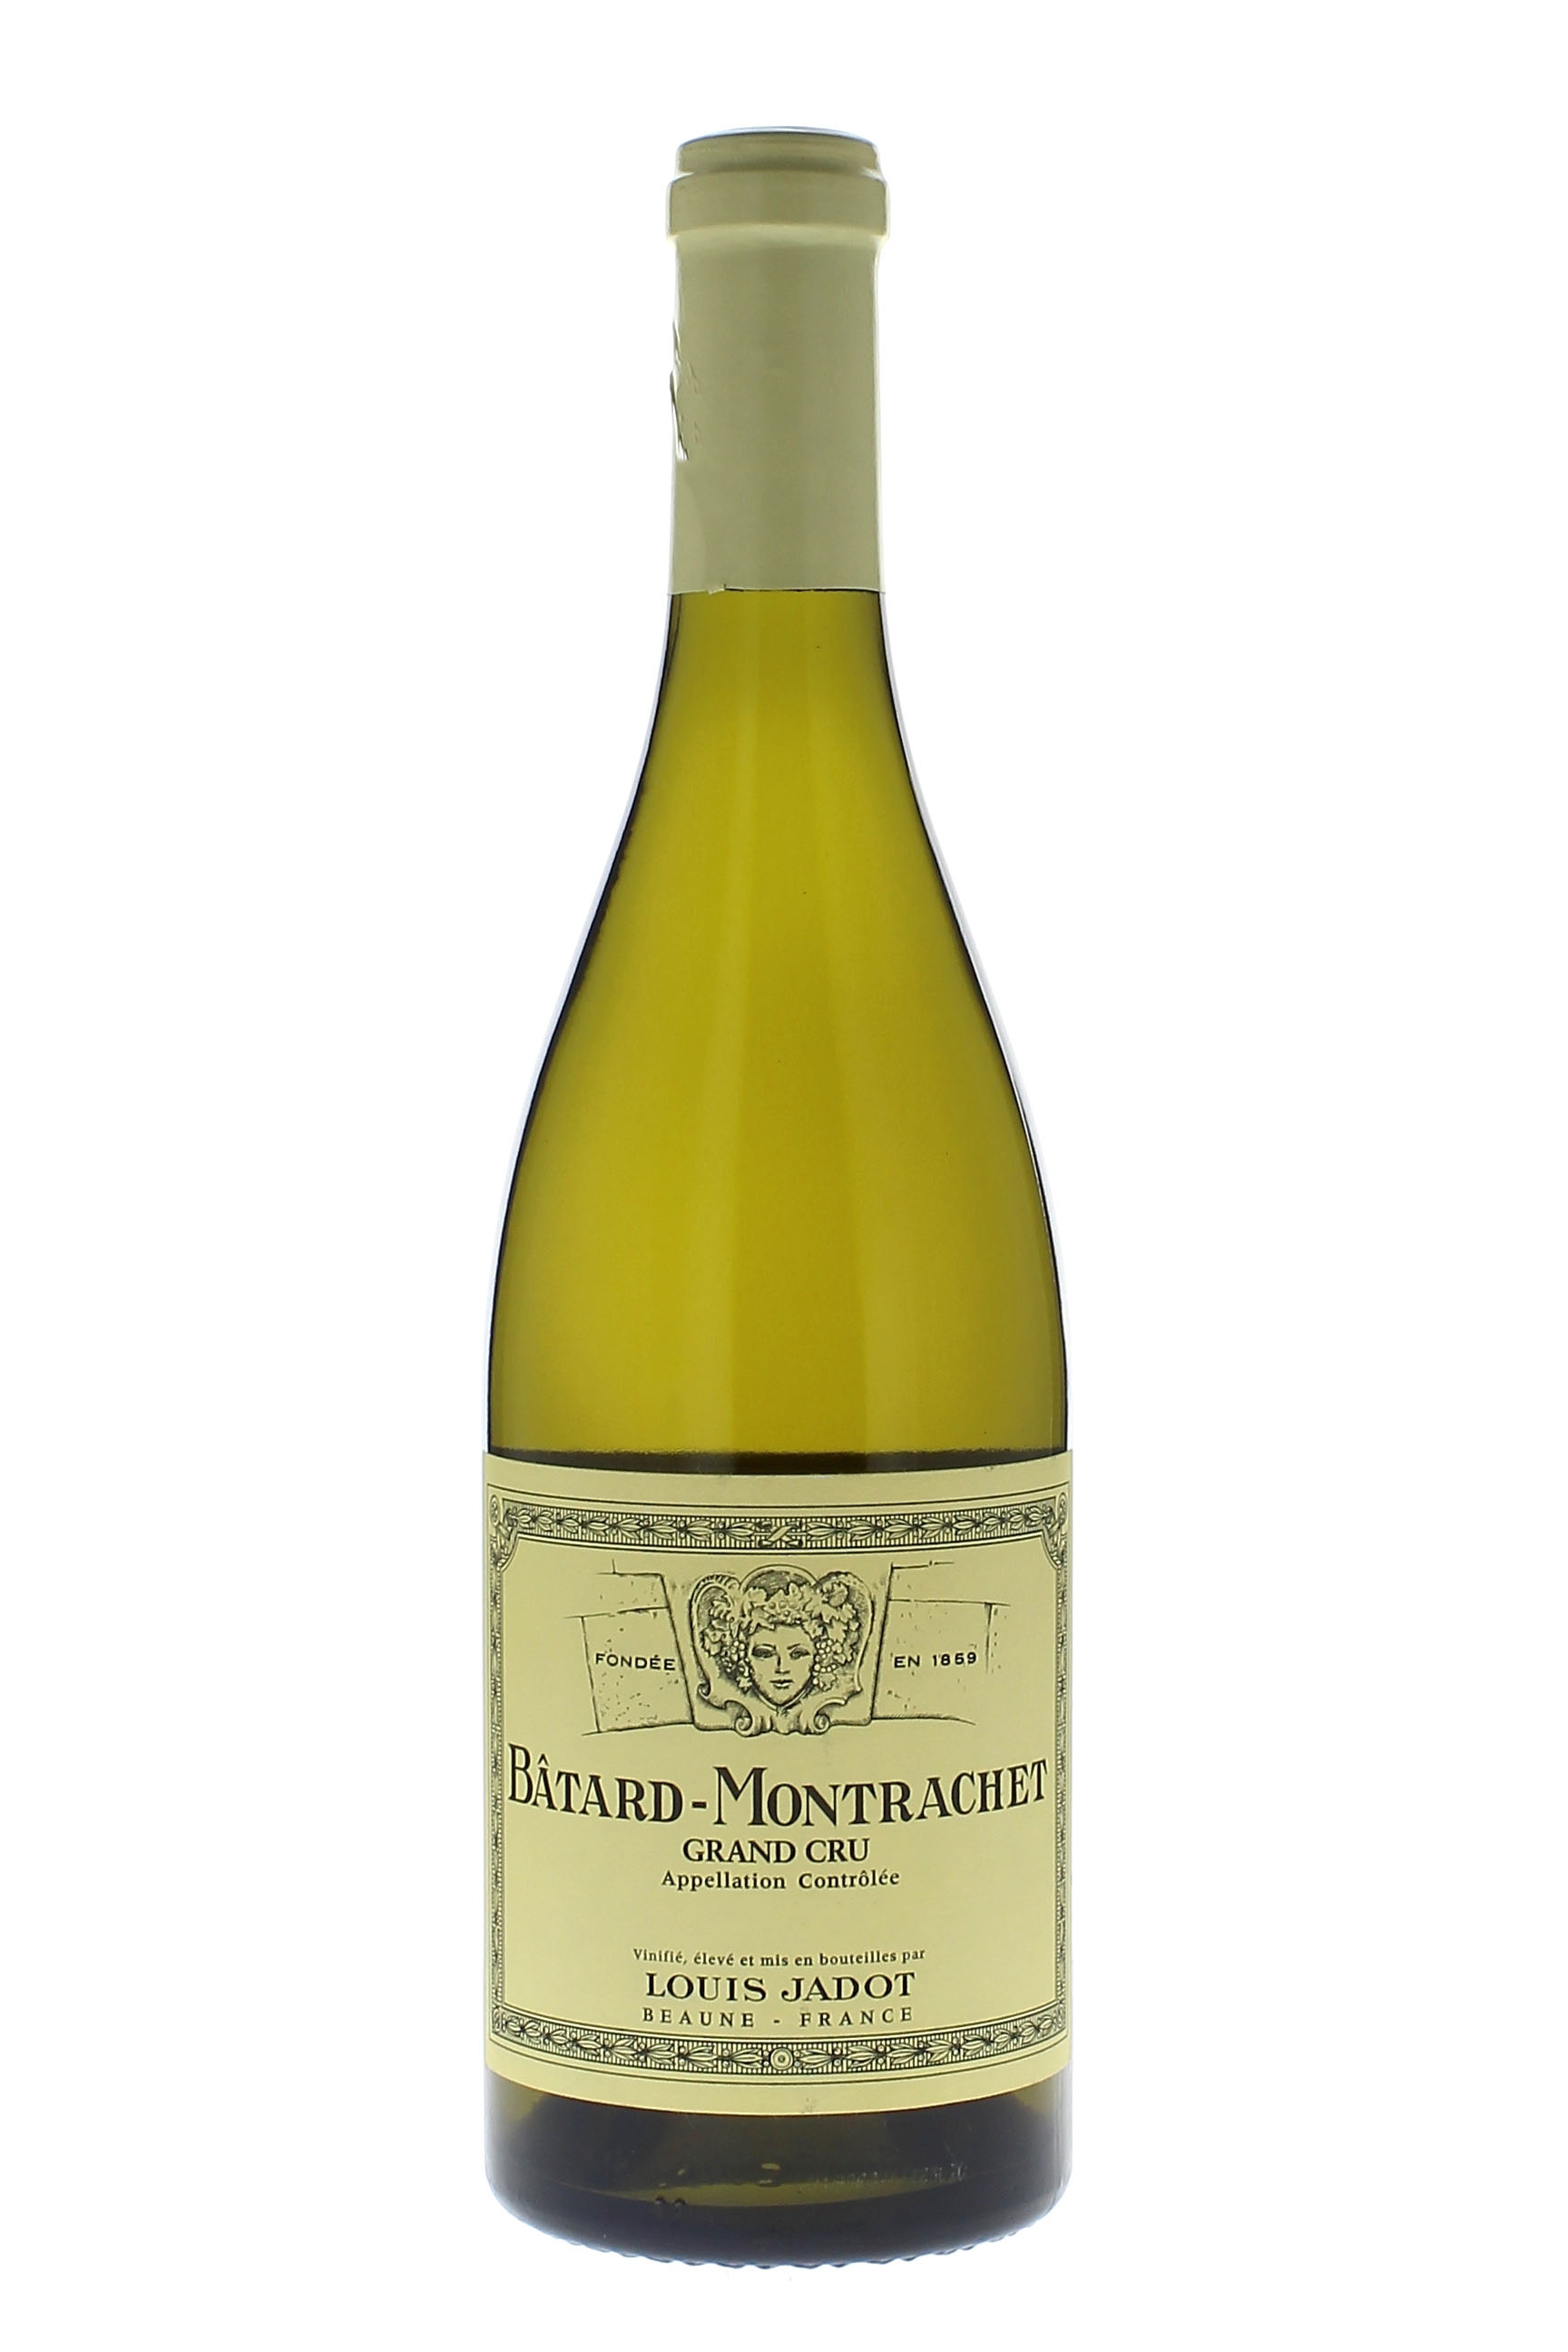 Batard montrachet 2015  Jadot Louis, Bourgogne blanc